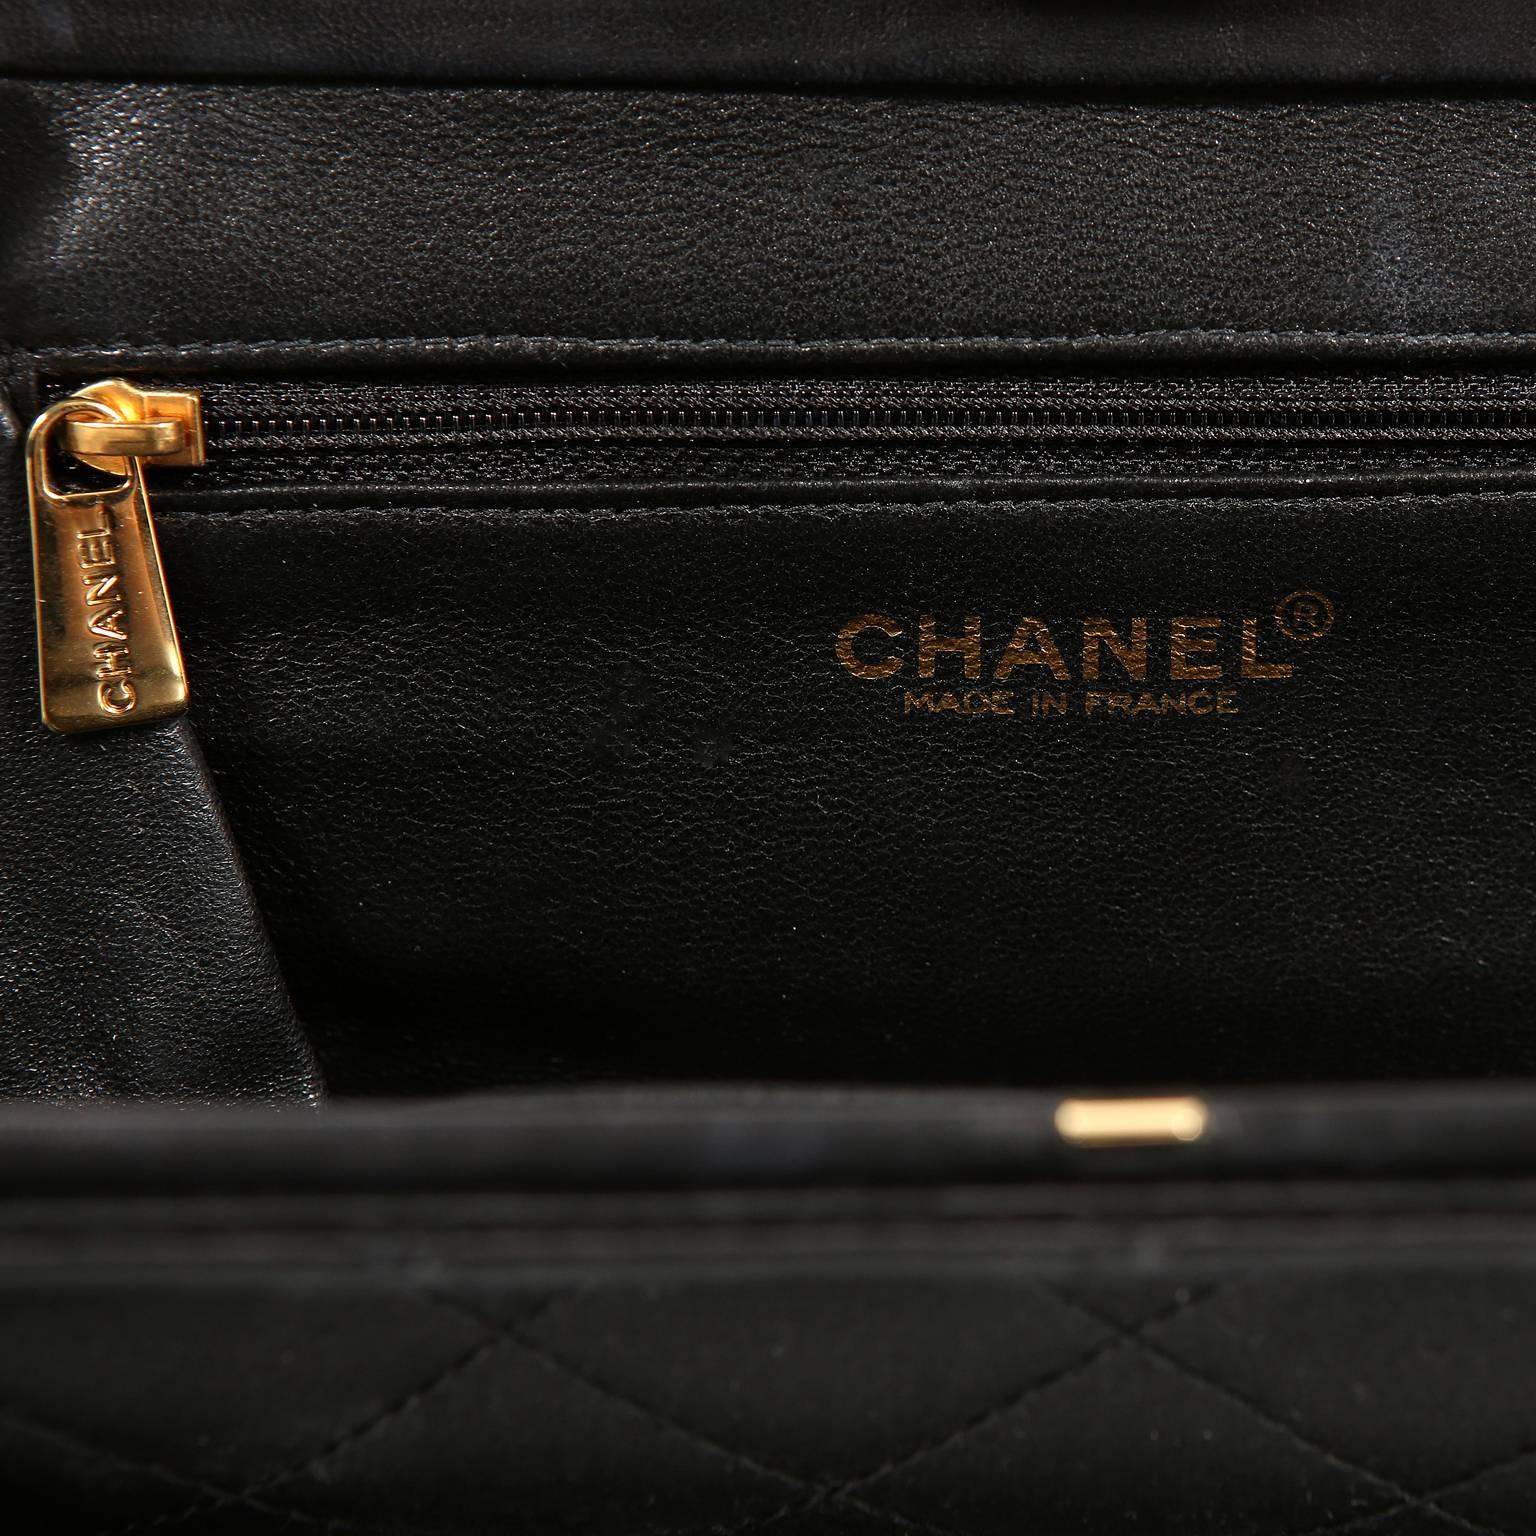 Chanel Black Satin Clutch Wristlet 2